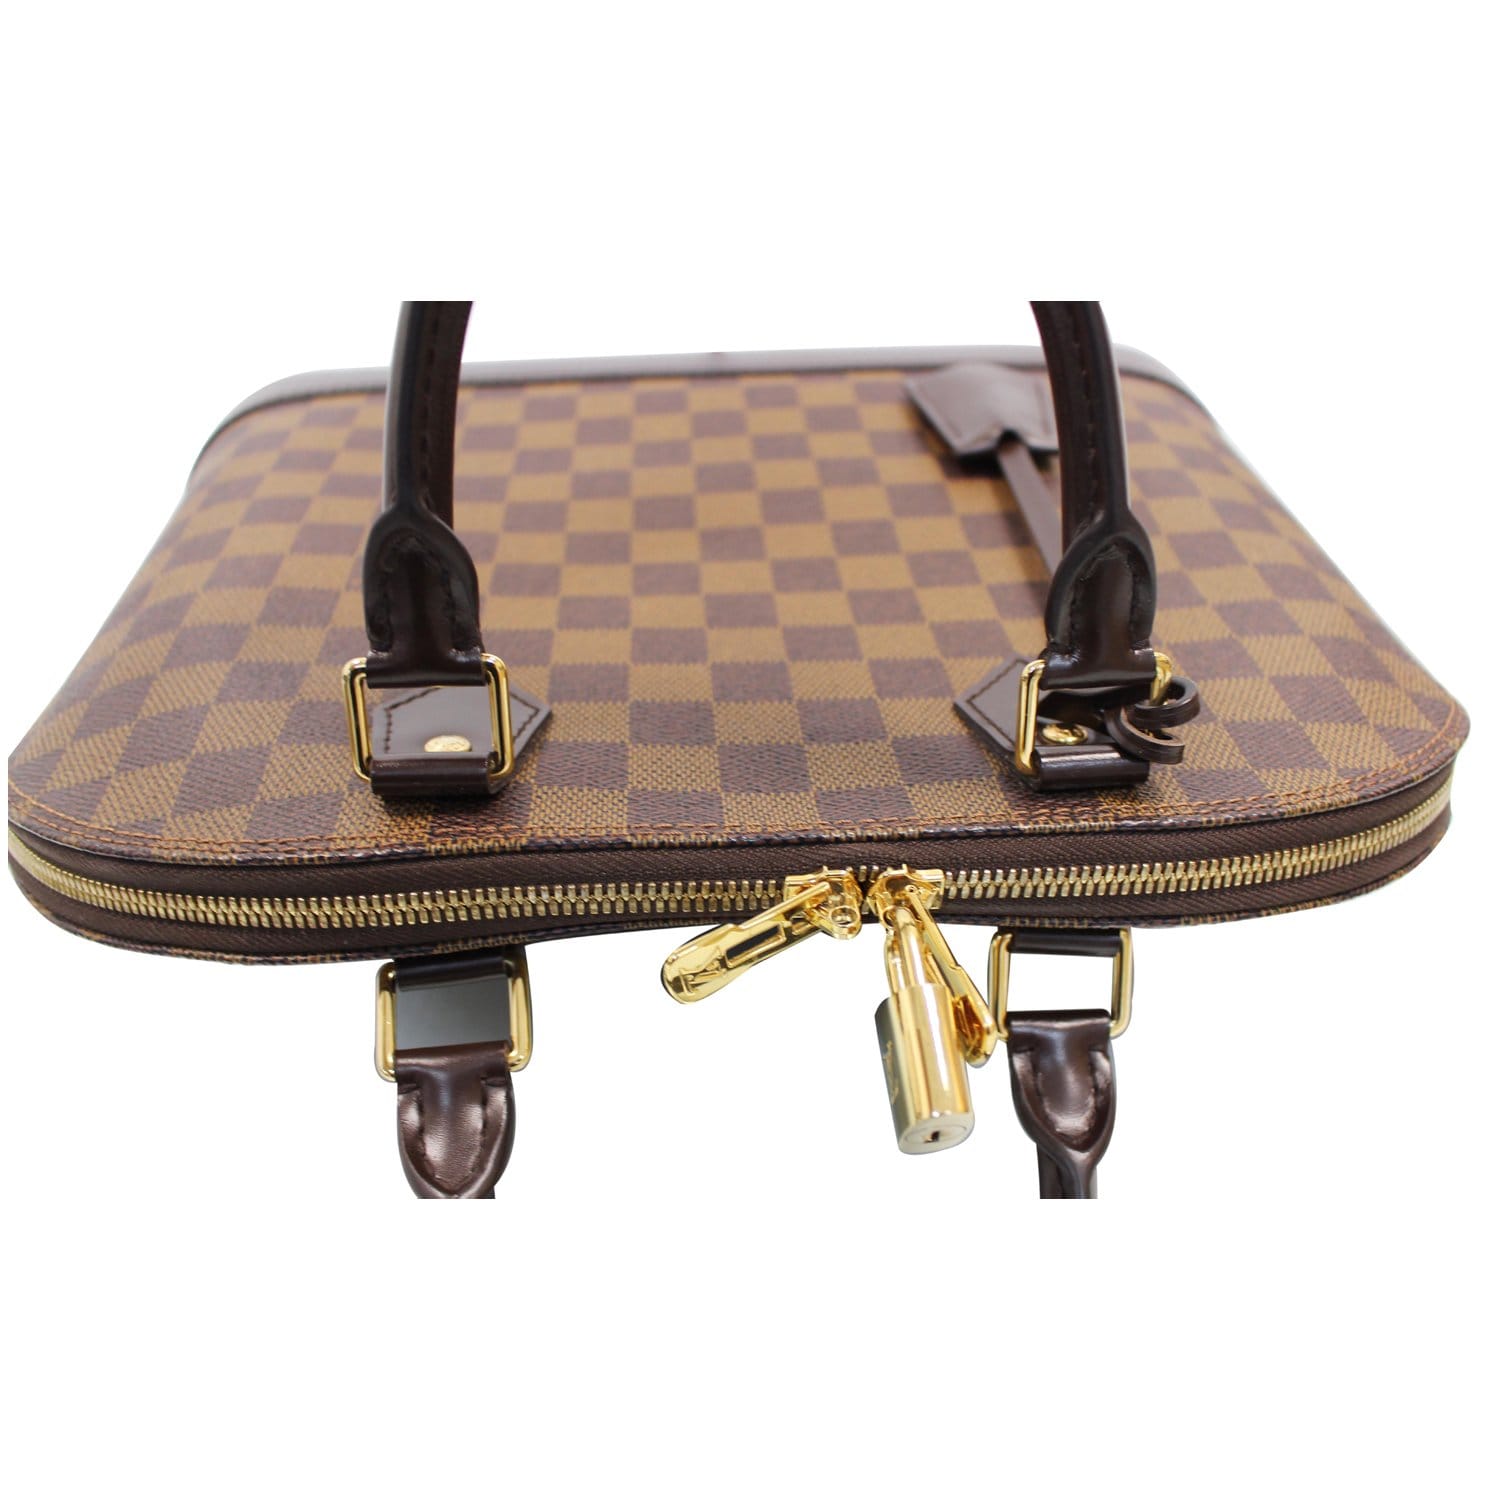 Louis Vuitton Vintage Damier Ebene Alma MM Handbag,Brown